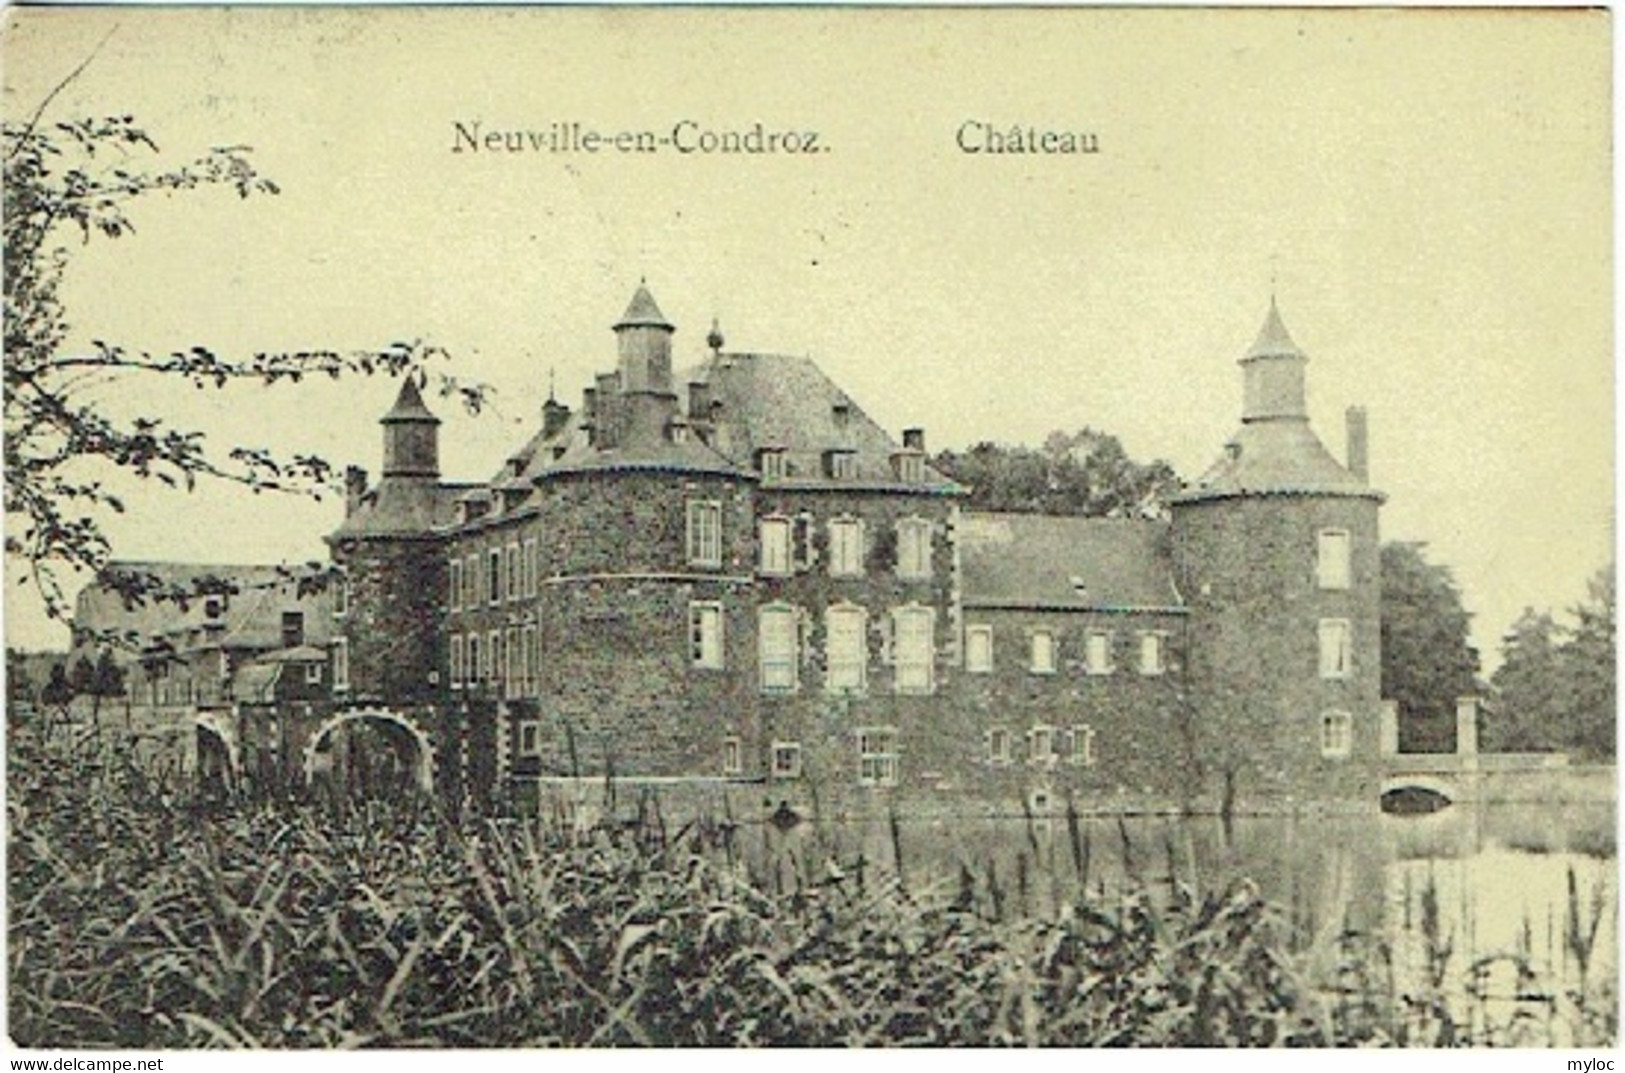 Neuville-en-Condroz. Château. - Neupre